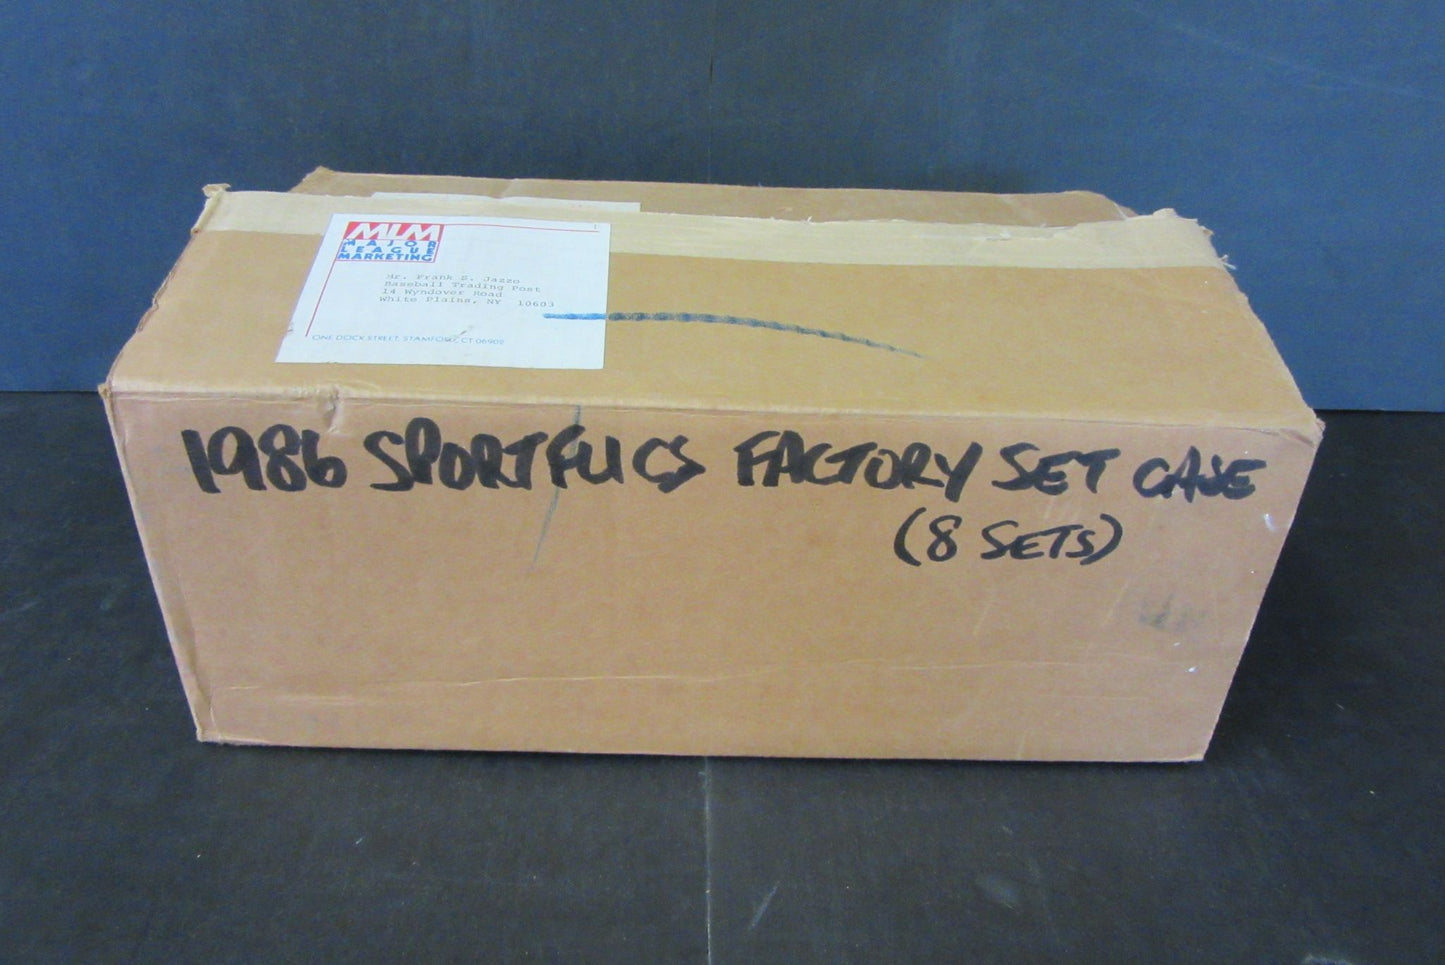 1986 Sportflics Baseball Factory Set Case (8 Sets)